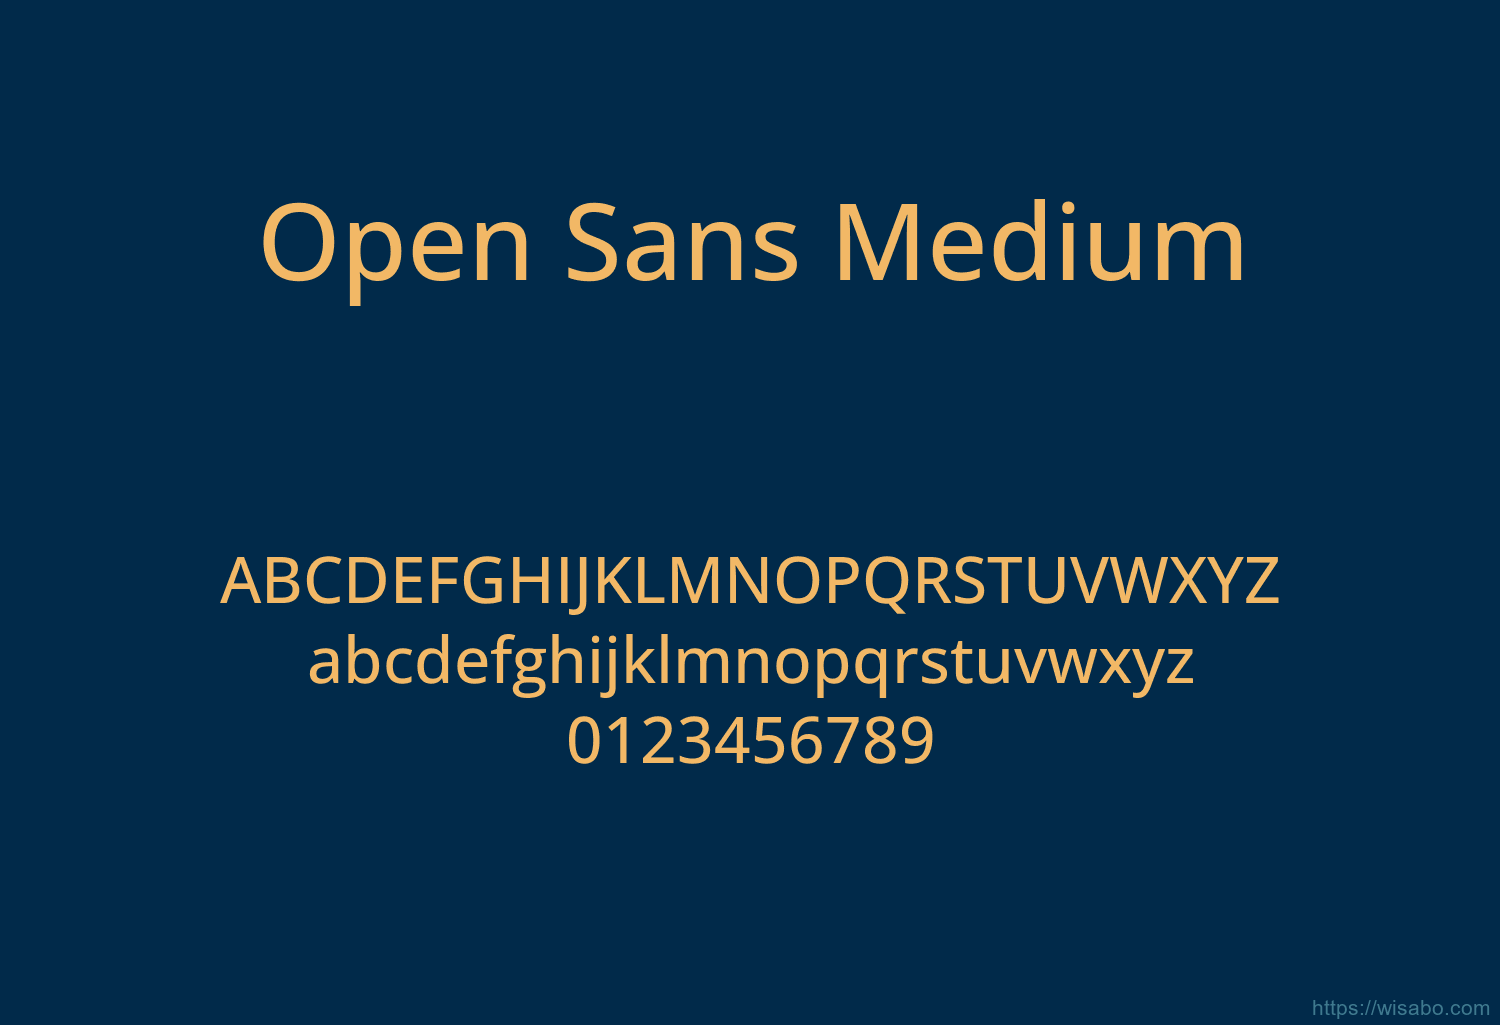 Open Sans Medium